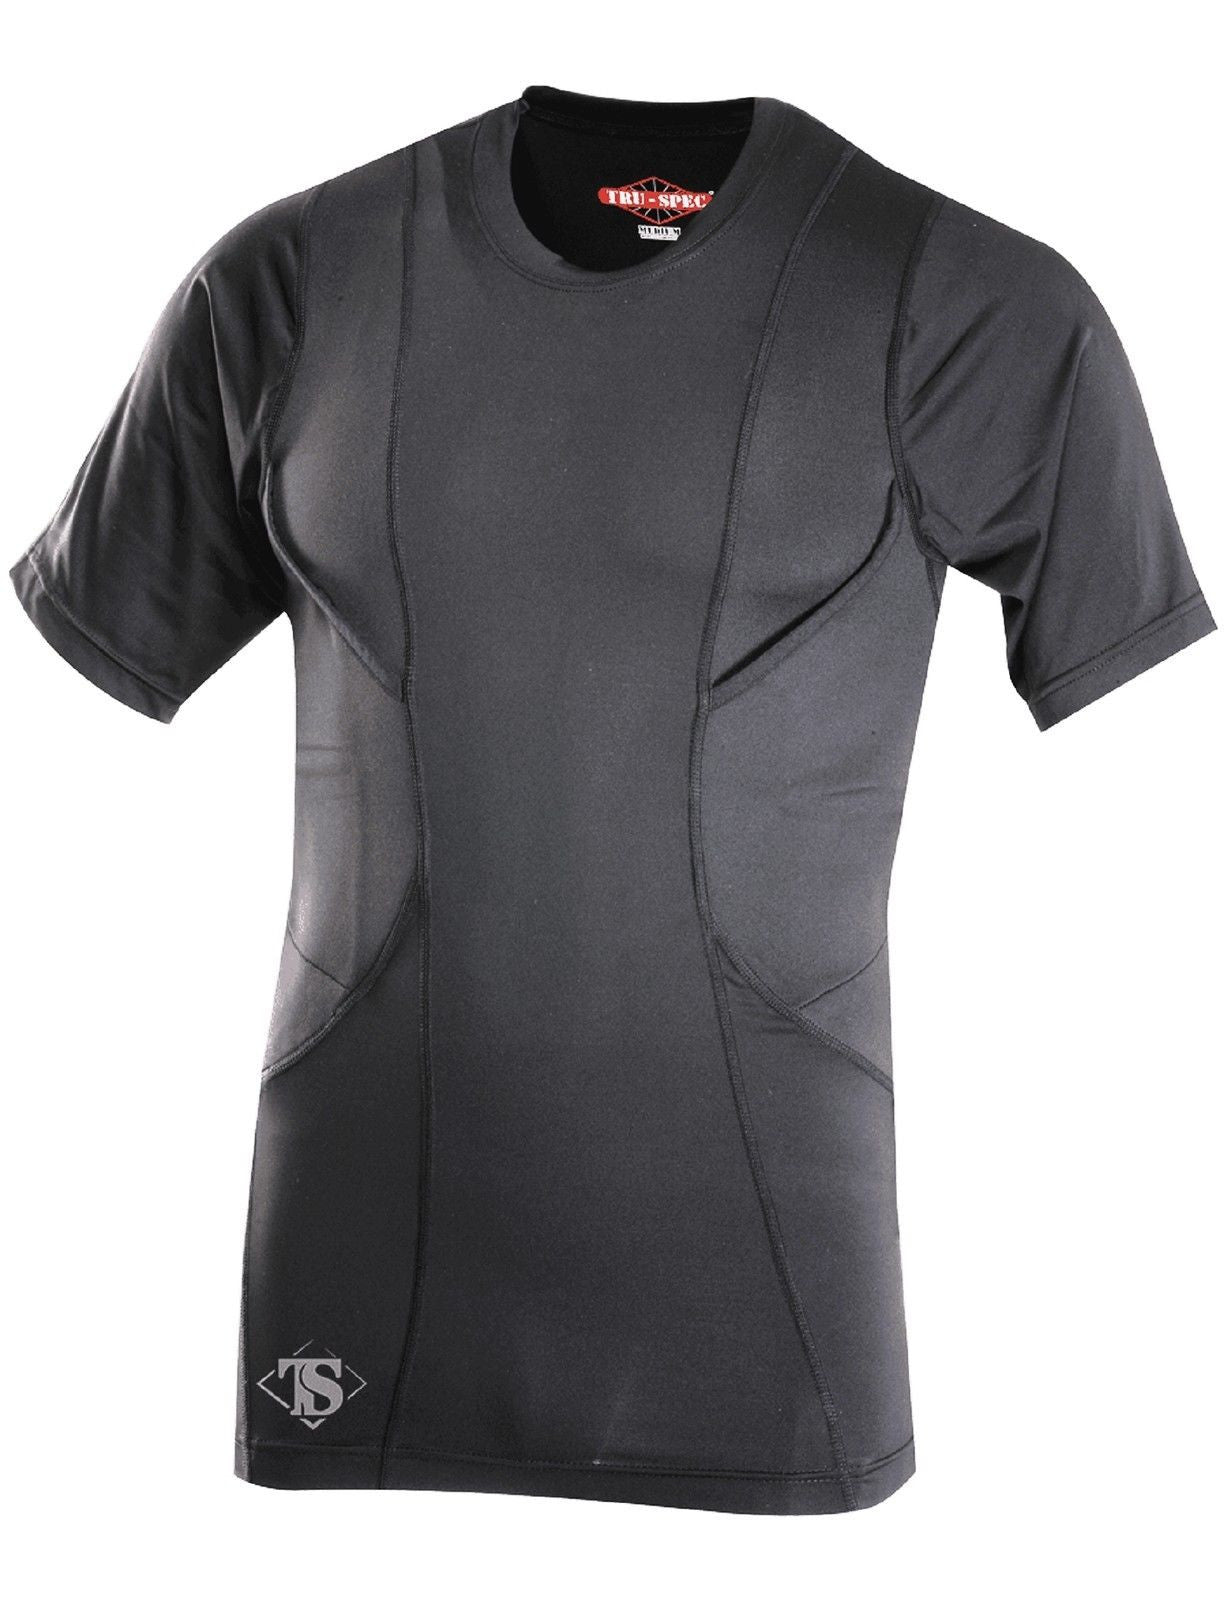 Tru-Spec Concealed Carry Holster Shirt - Men's 24-7 Series Tactical Un ...